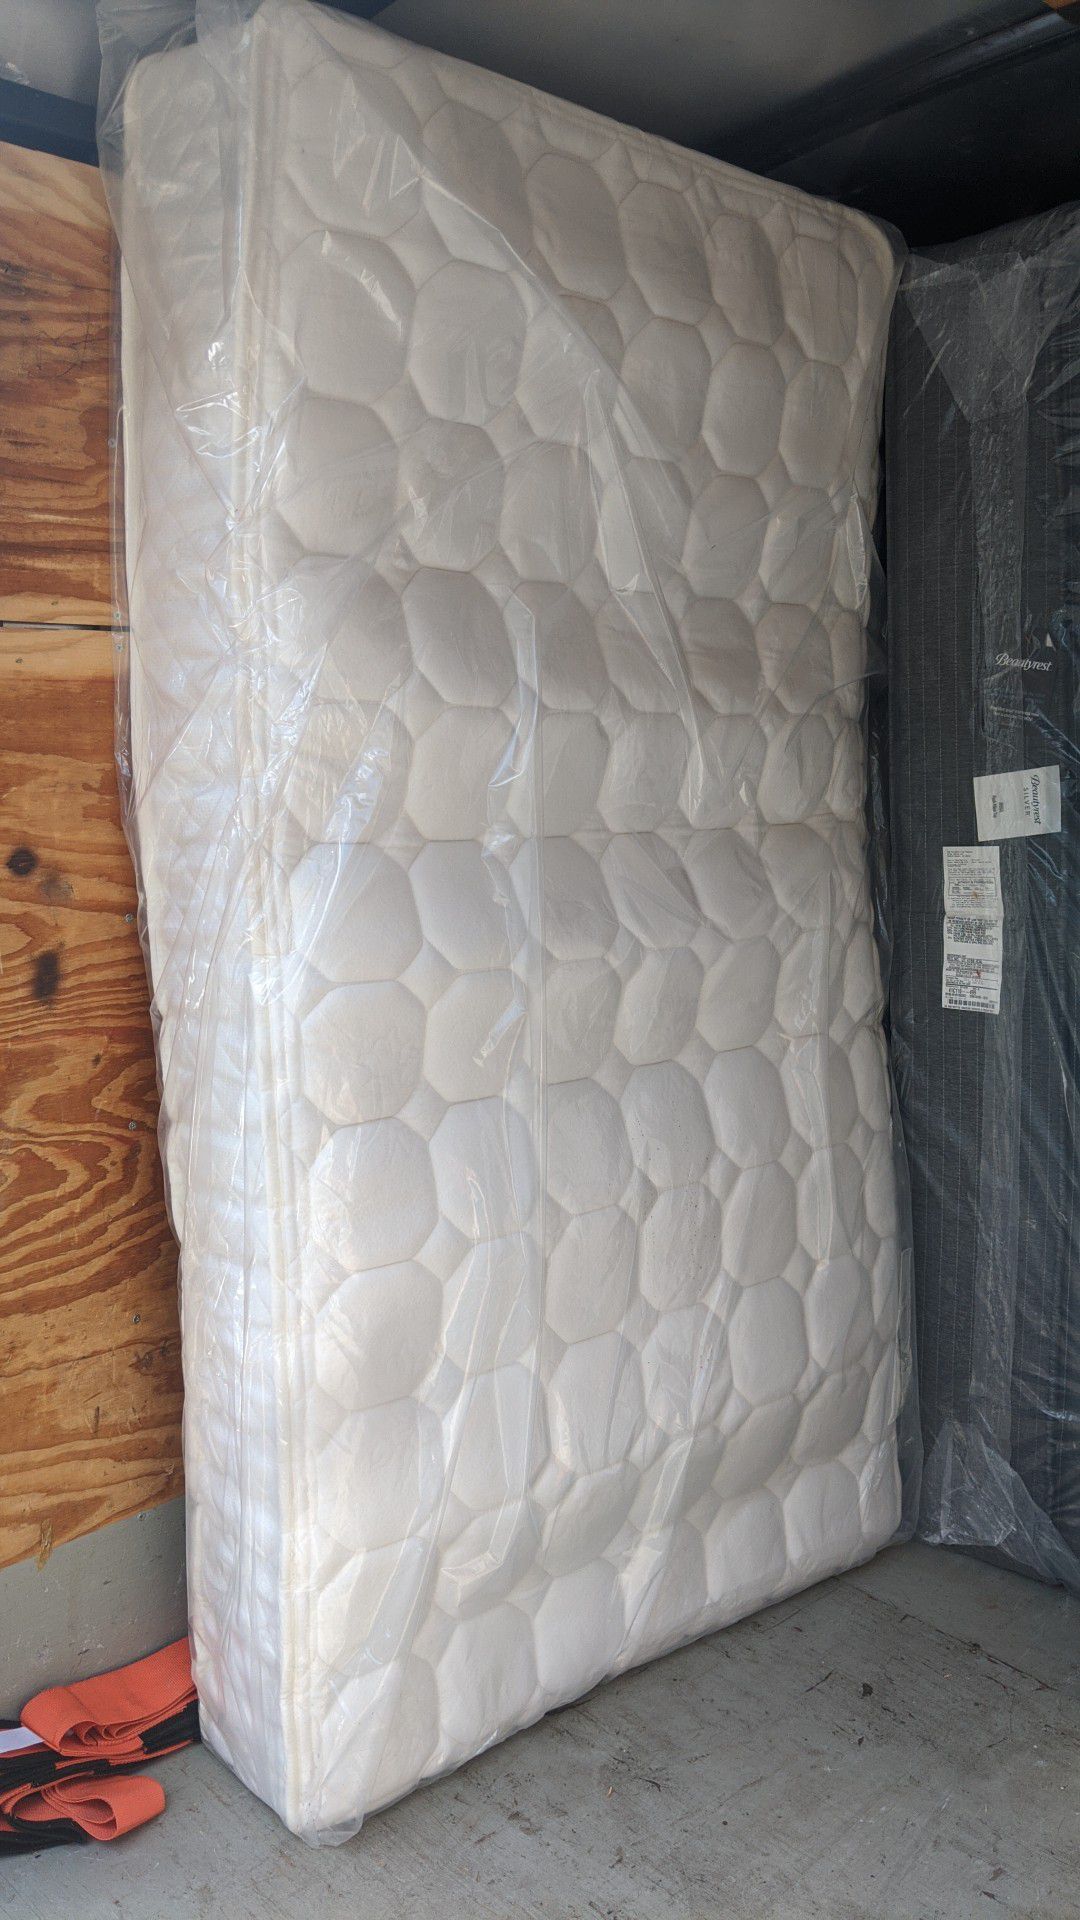 Twin size inner spring mattress $85.